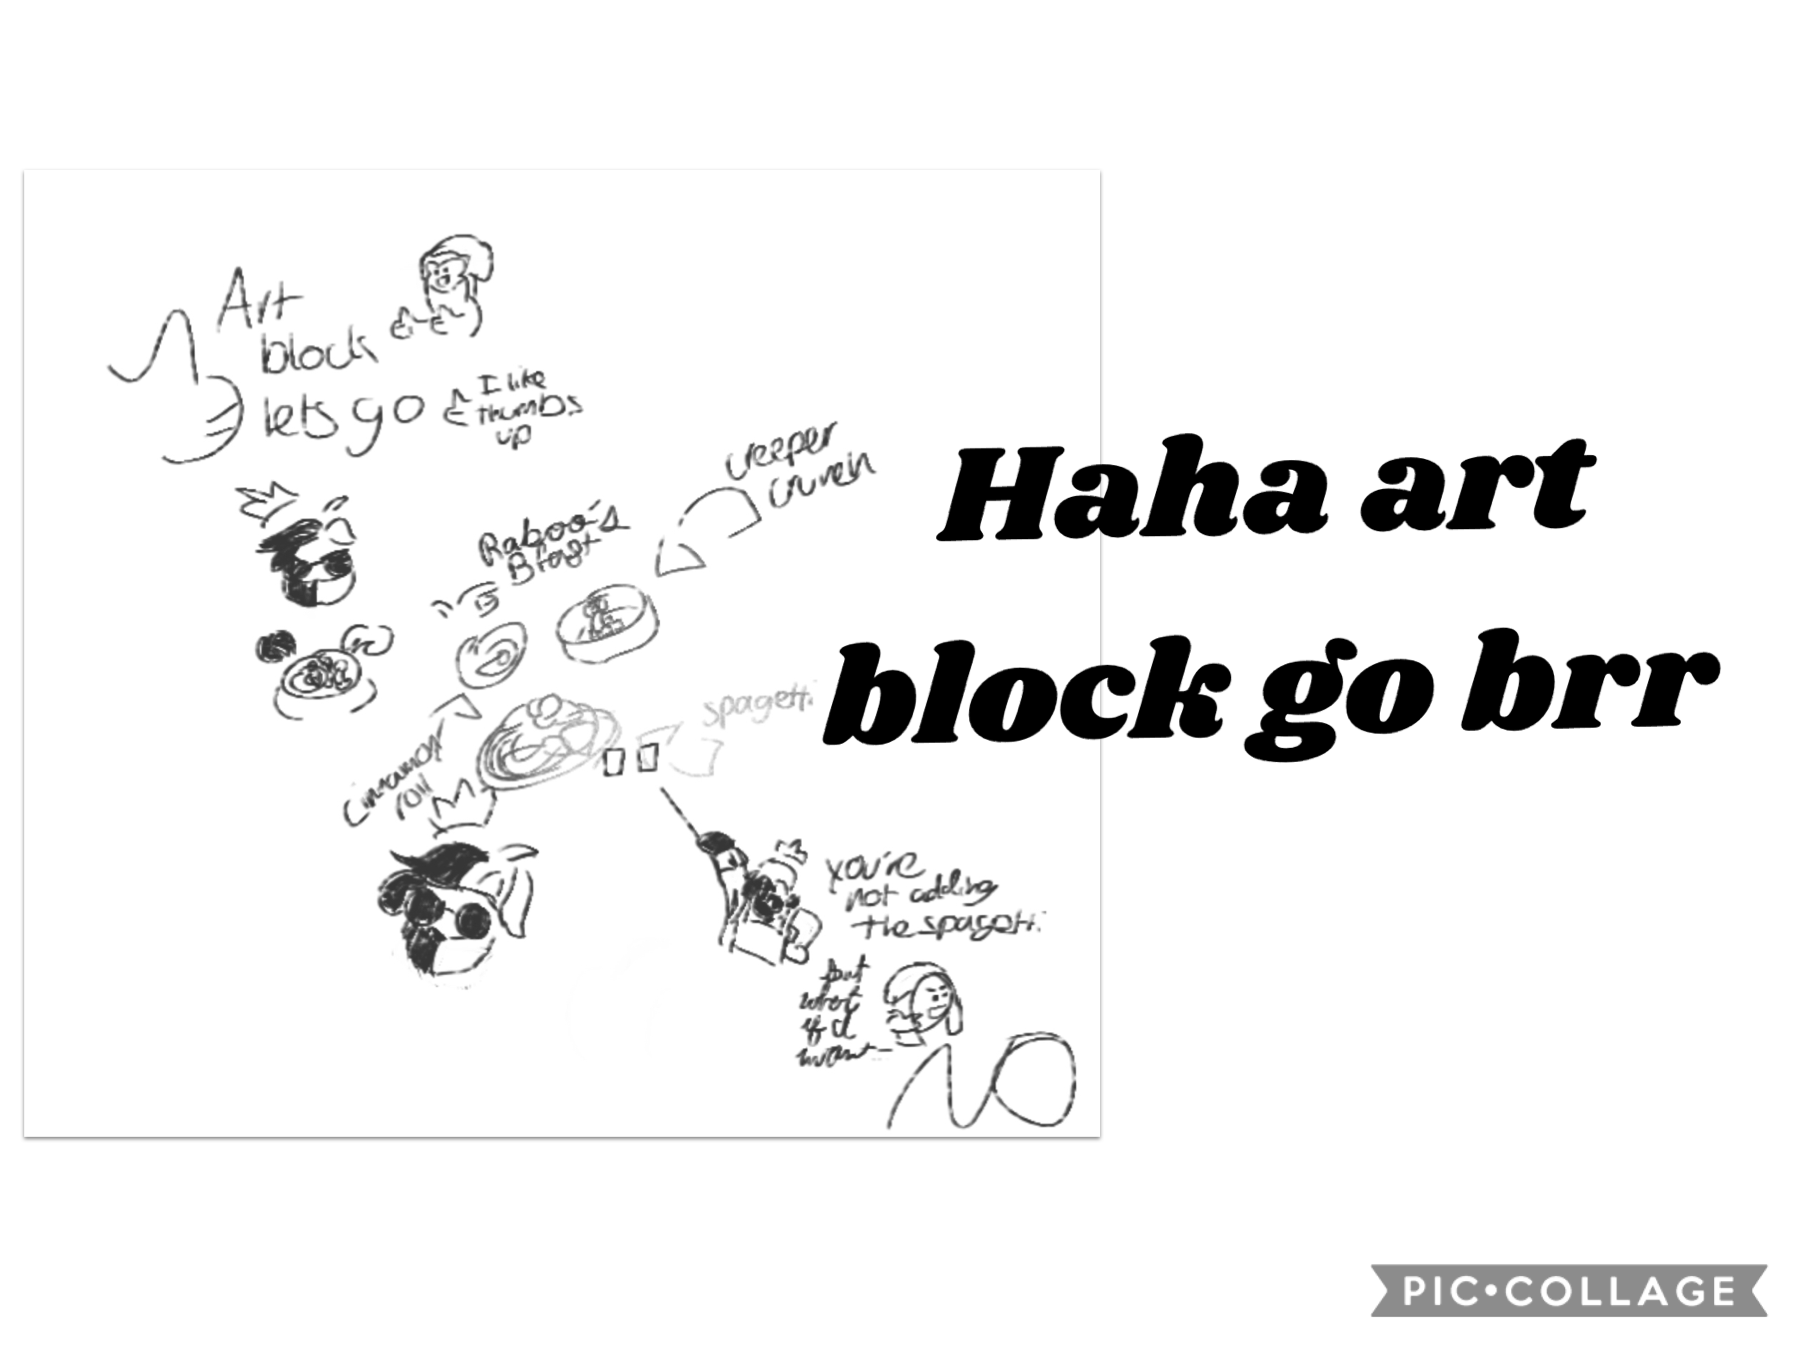 Art block is coming how fun